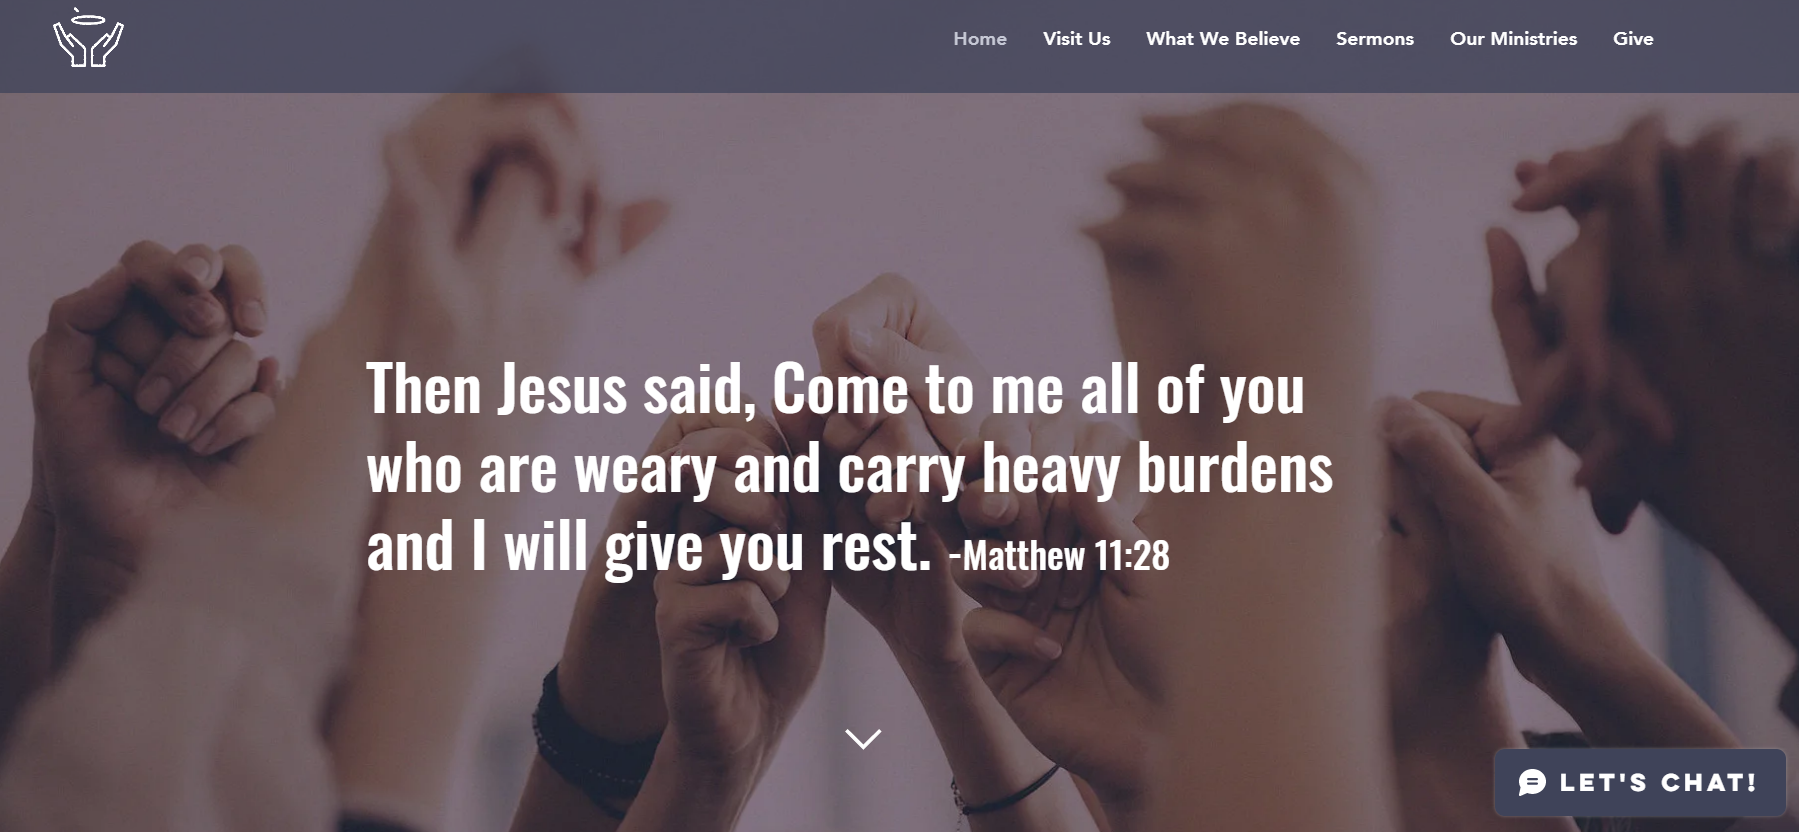 church website example